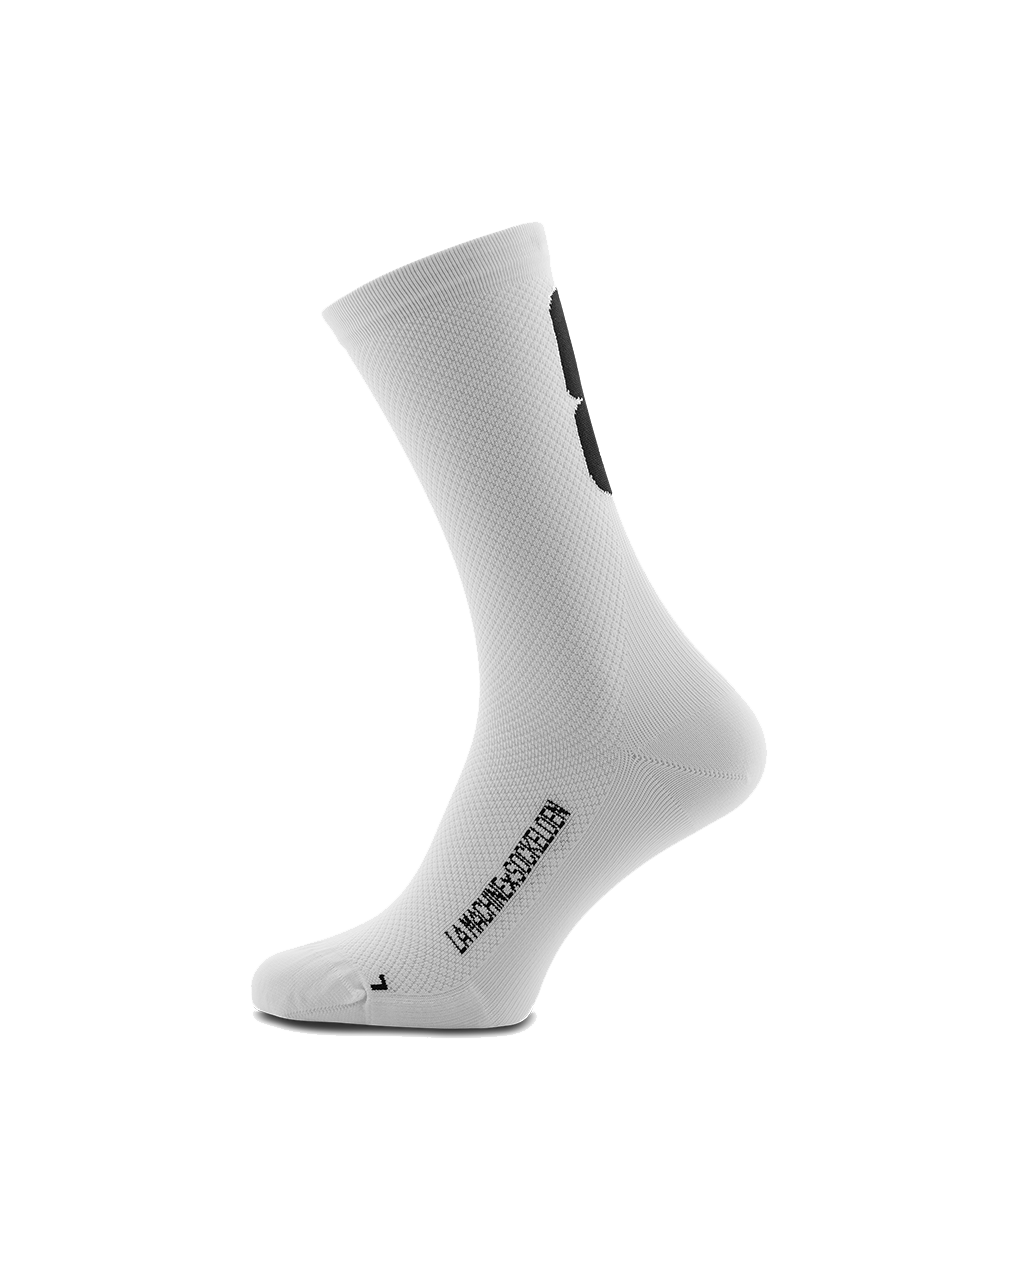 sockeloen-bib-number-13-cycling-socks